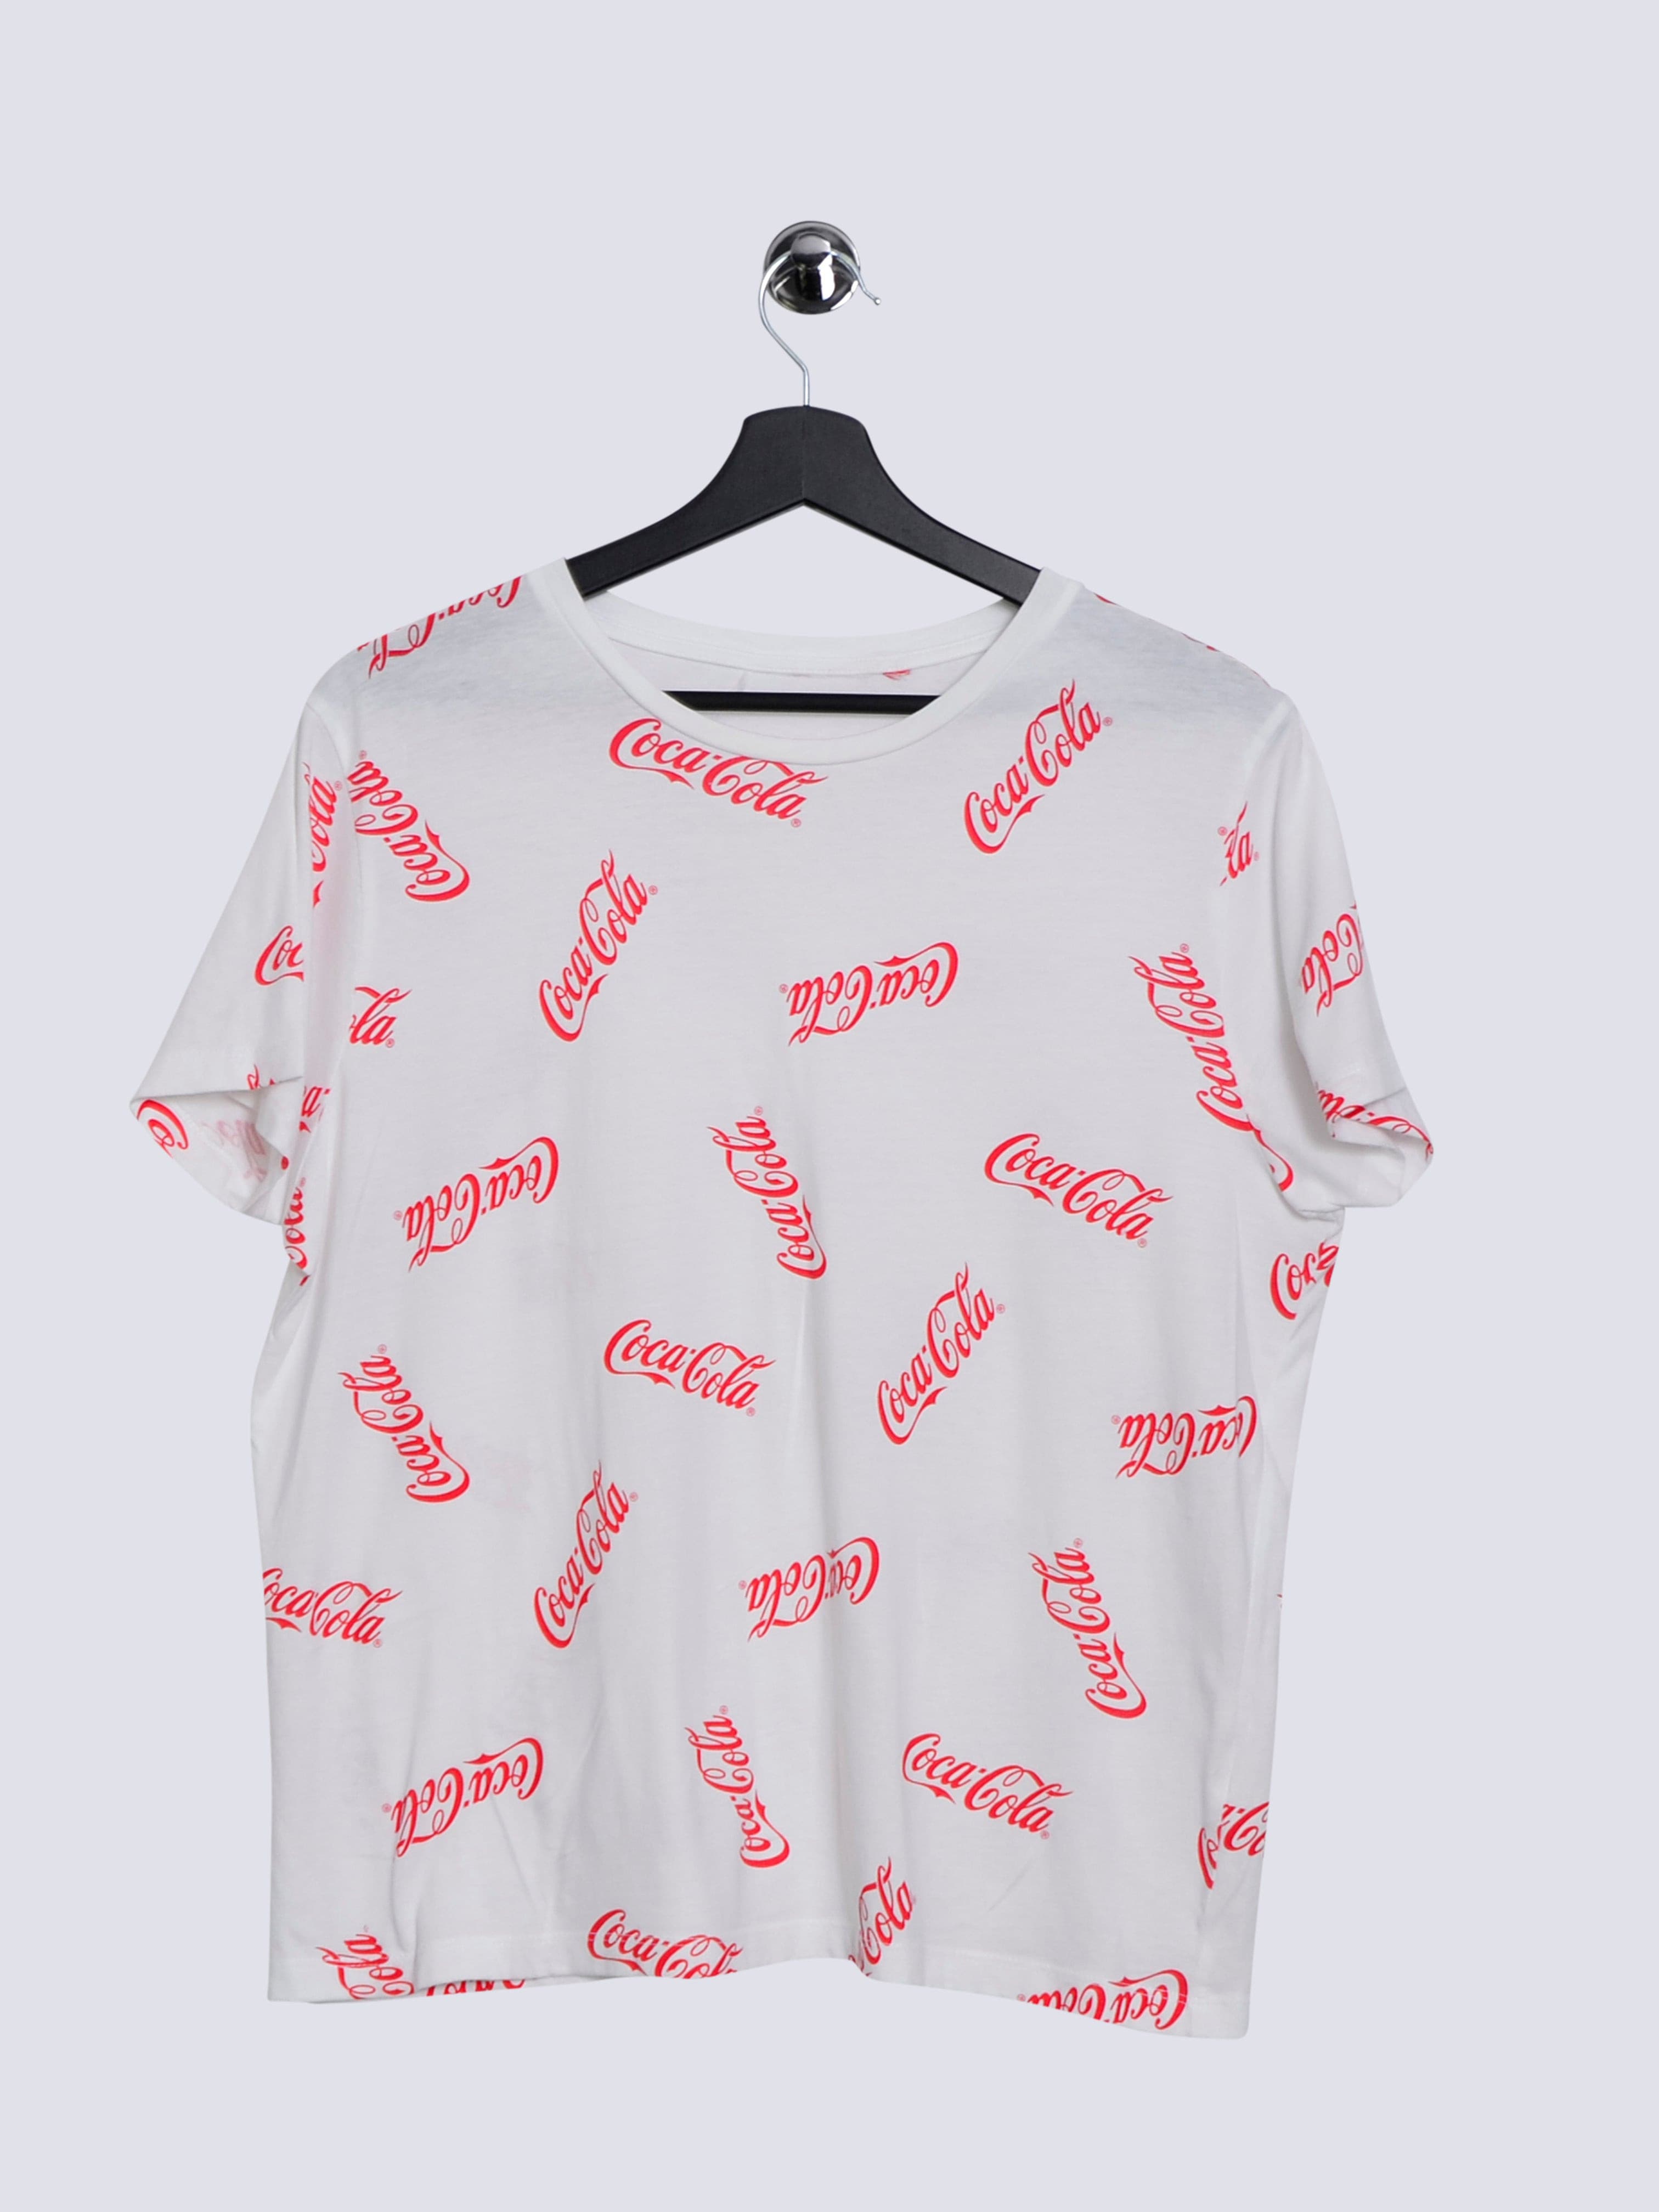 Coca Cola Print Shirt White // X-Small - RHAGHOUSE VINTAGE